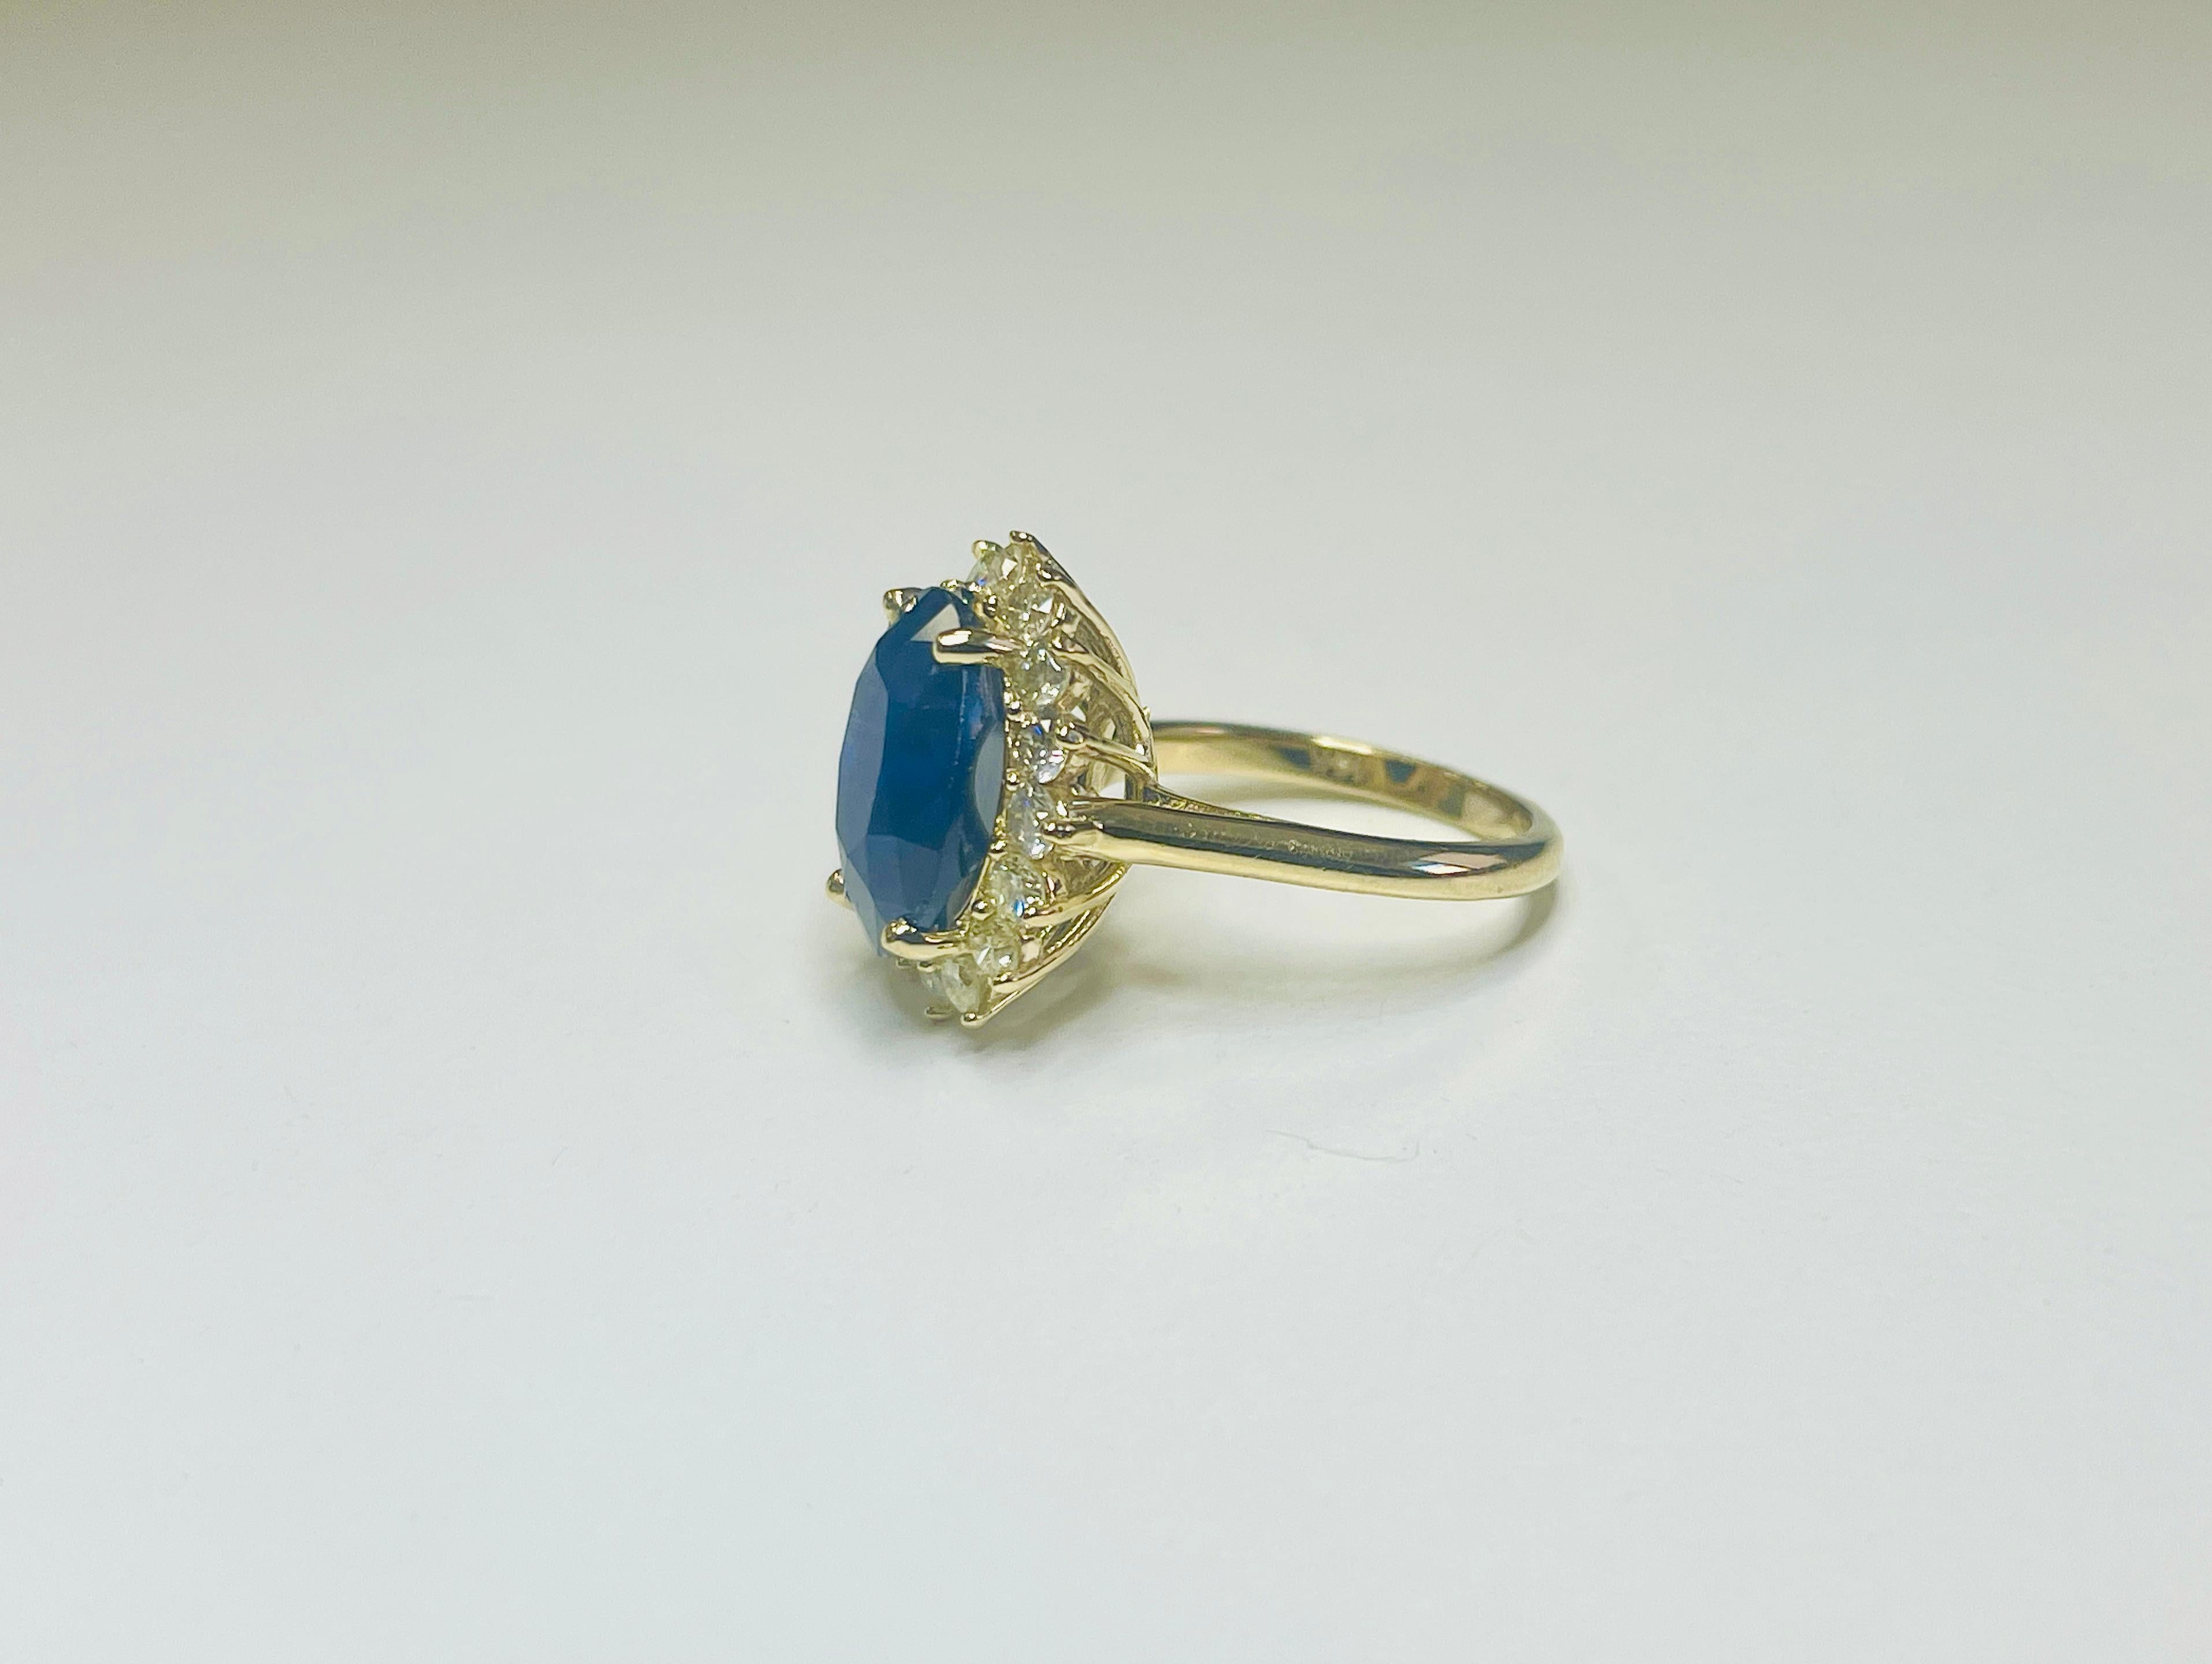 Cushion Cut 8.71 Carat Intense Blue Oval Cut Natural Sapphire 14K Yellow Gold Diamond Ring